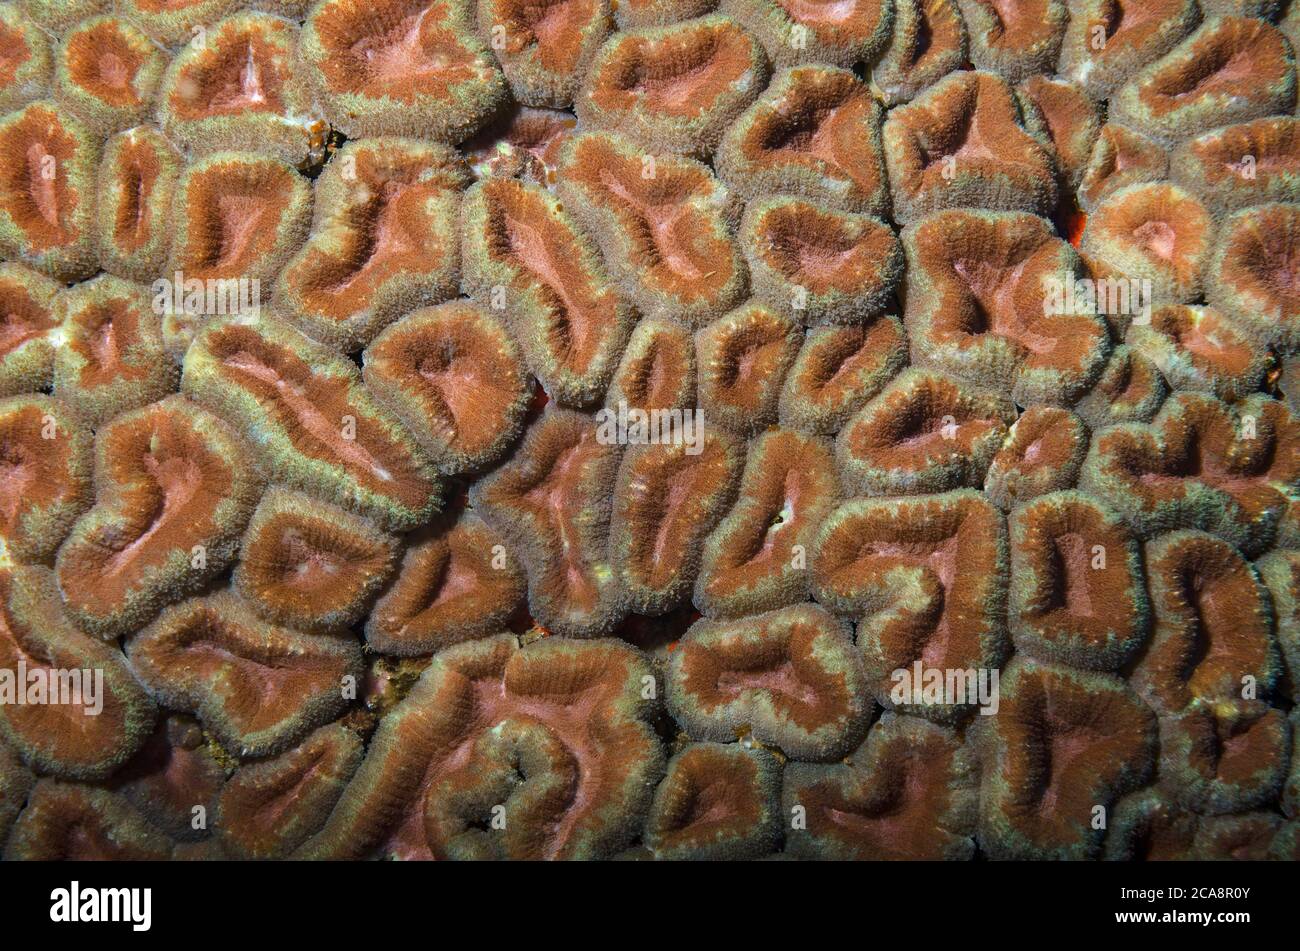 close up, Brain coral, Lobophyllia hemprichii, Tulamben, Bali Stock Photo